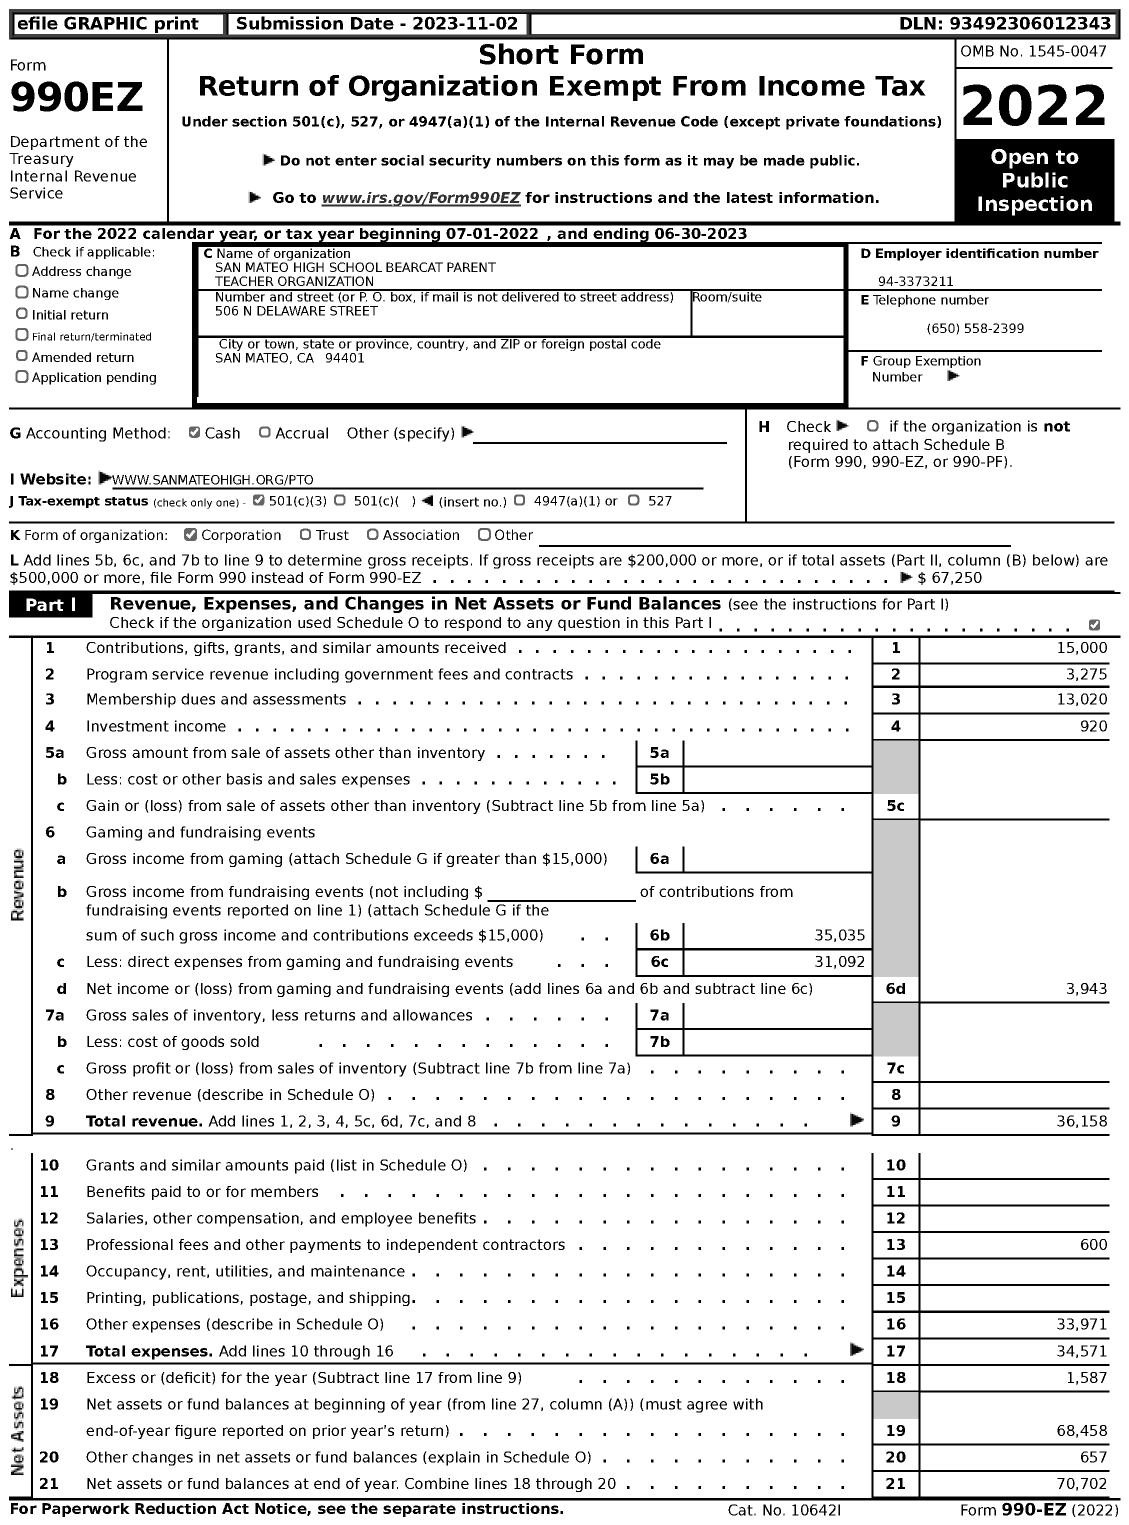 Image of first page of 2022 Form 990EZ for San Mateo High School Bearcat Parent Teacher Organization